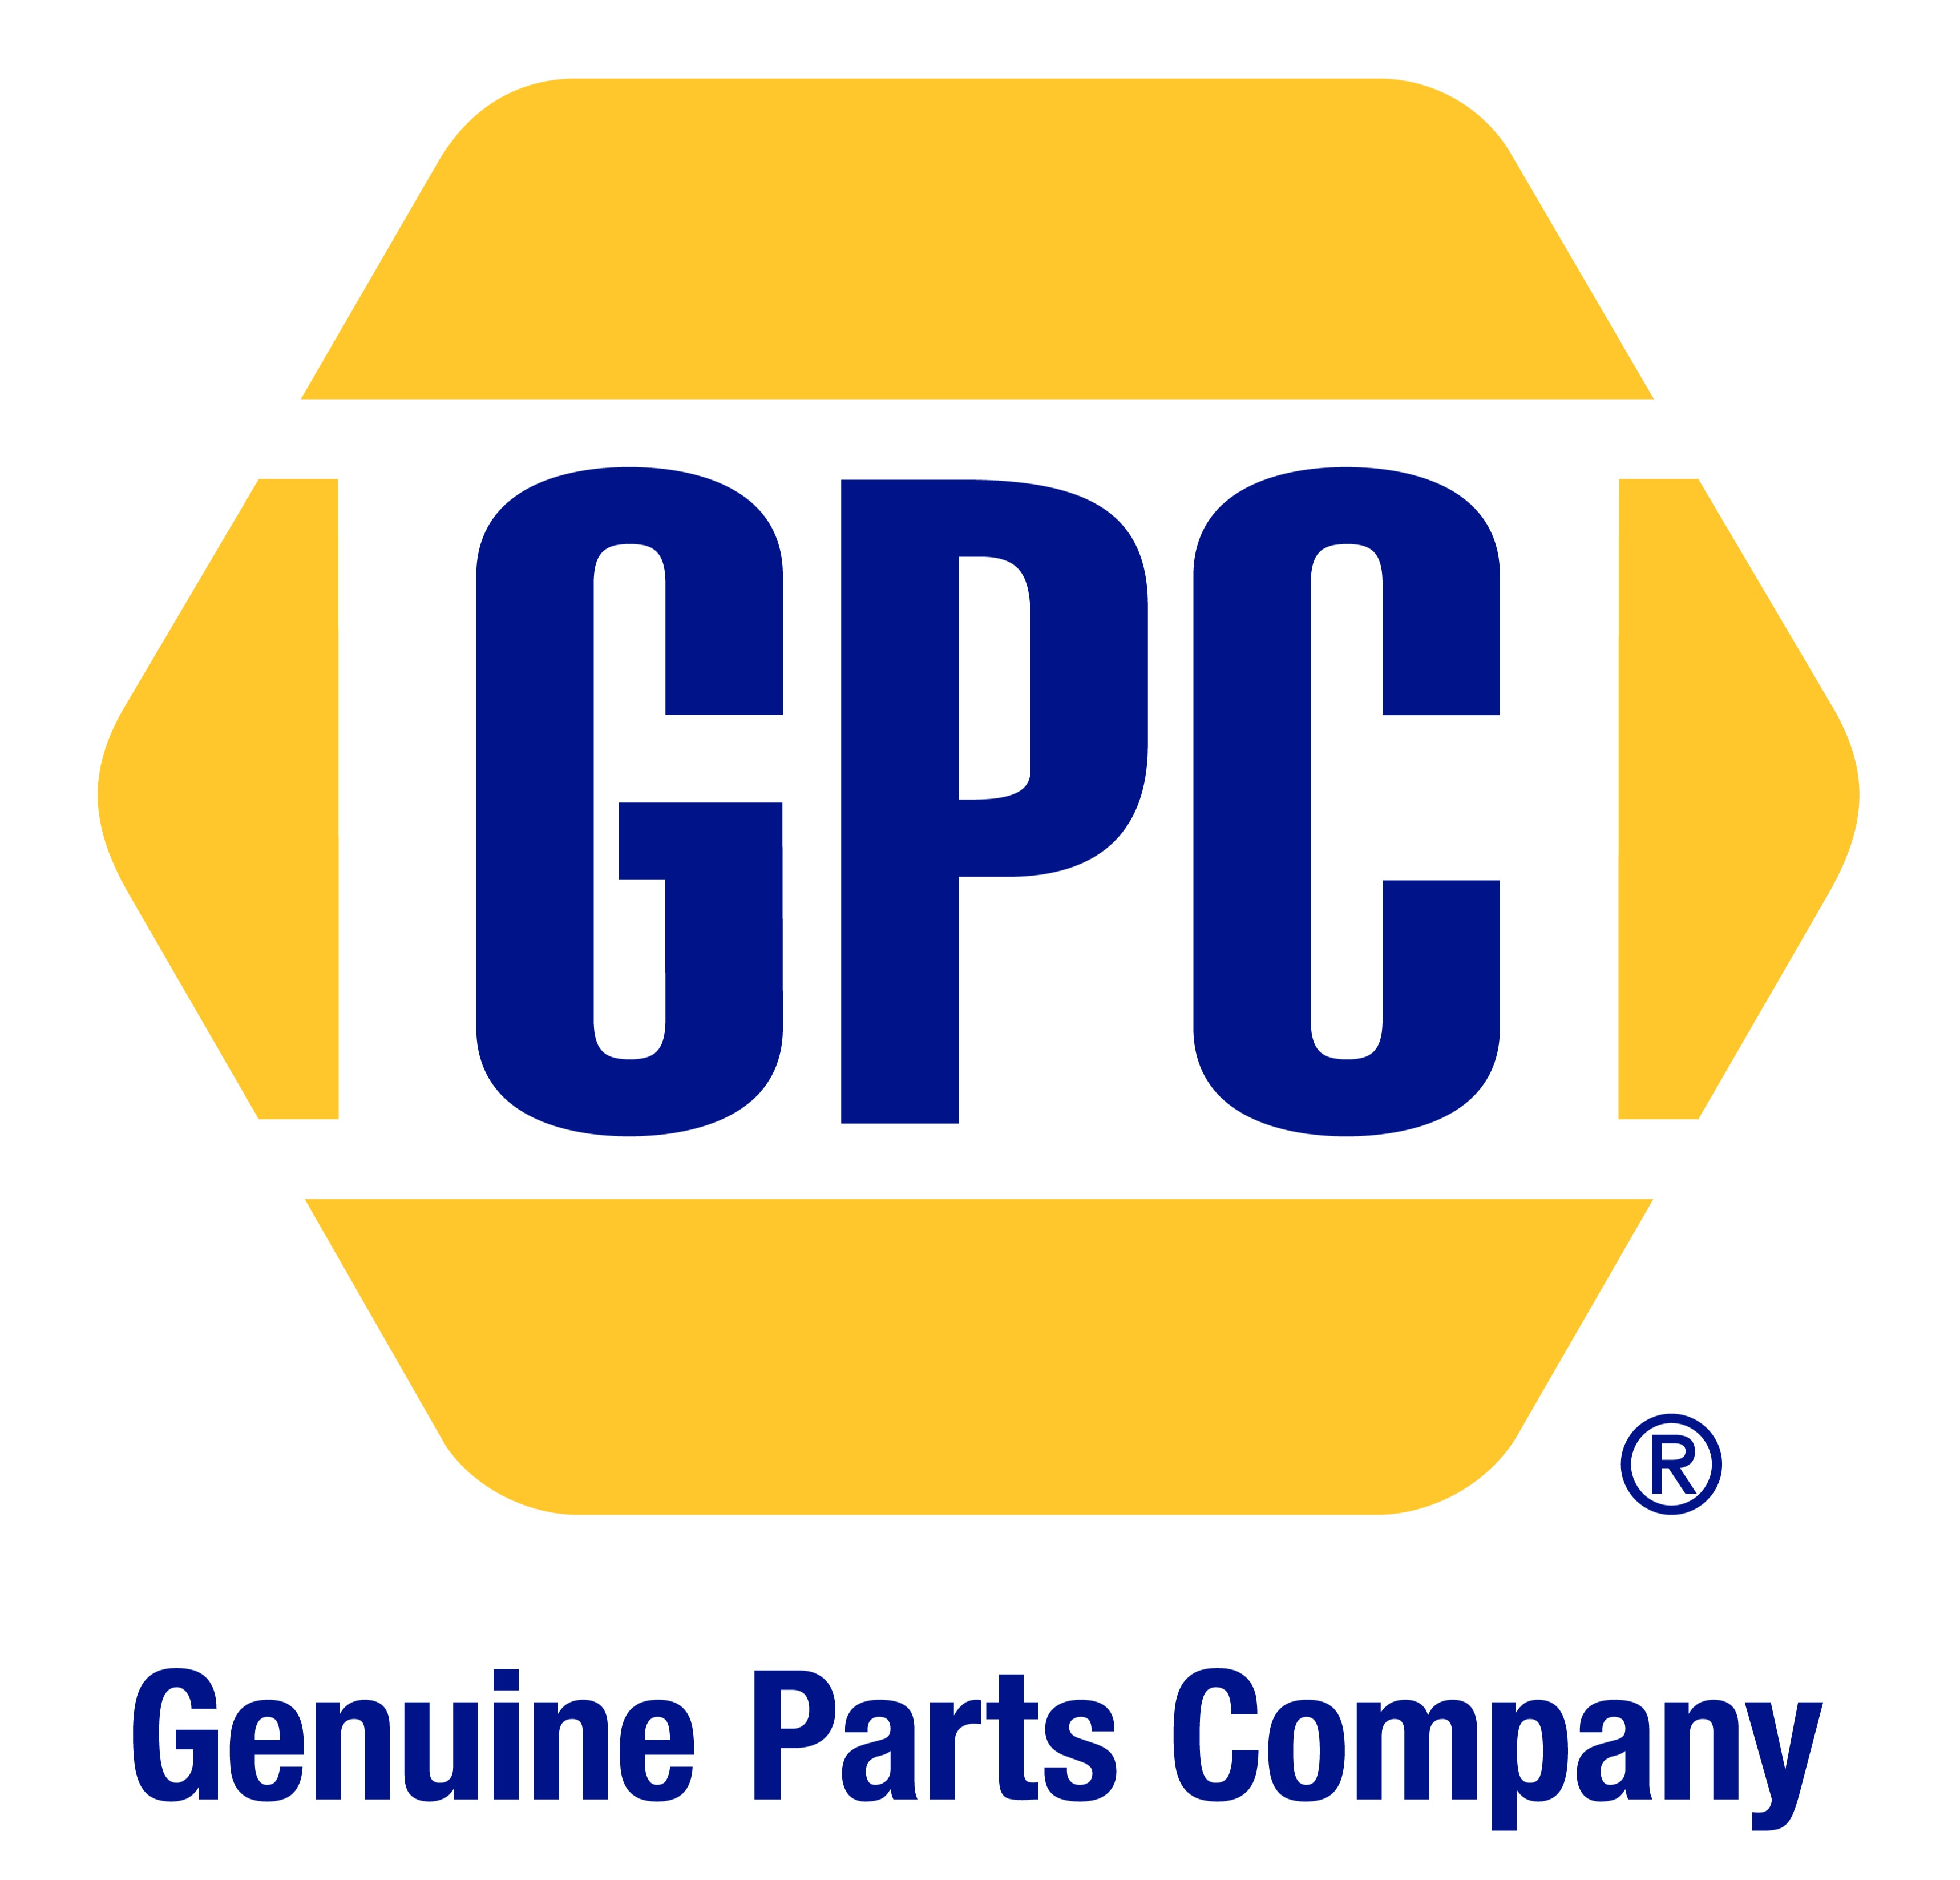 Genuine Parts Company